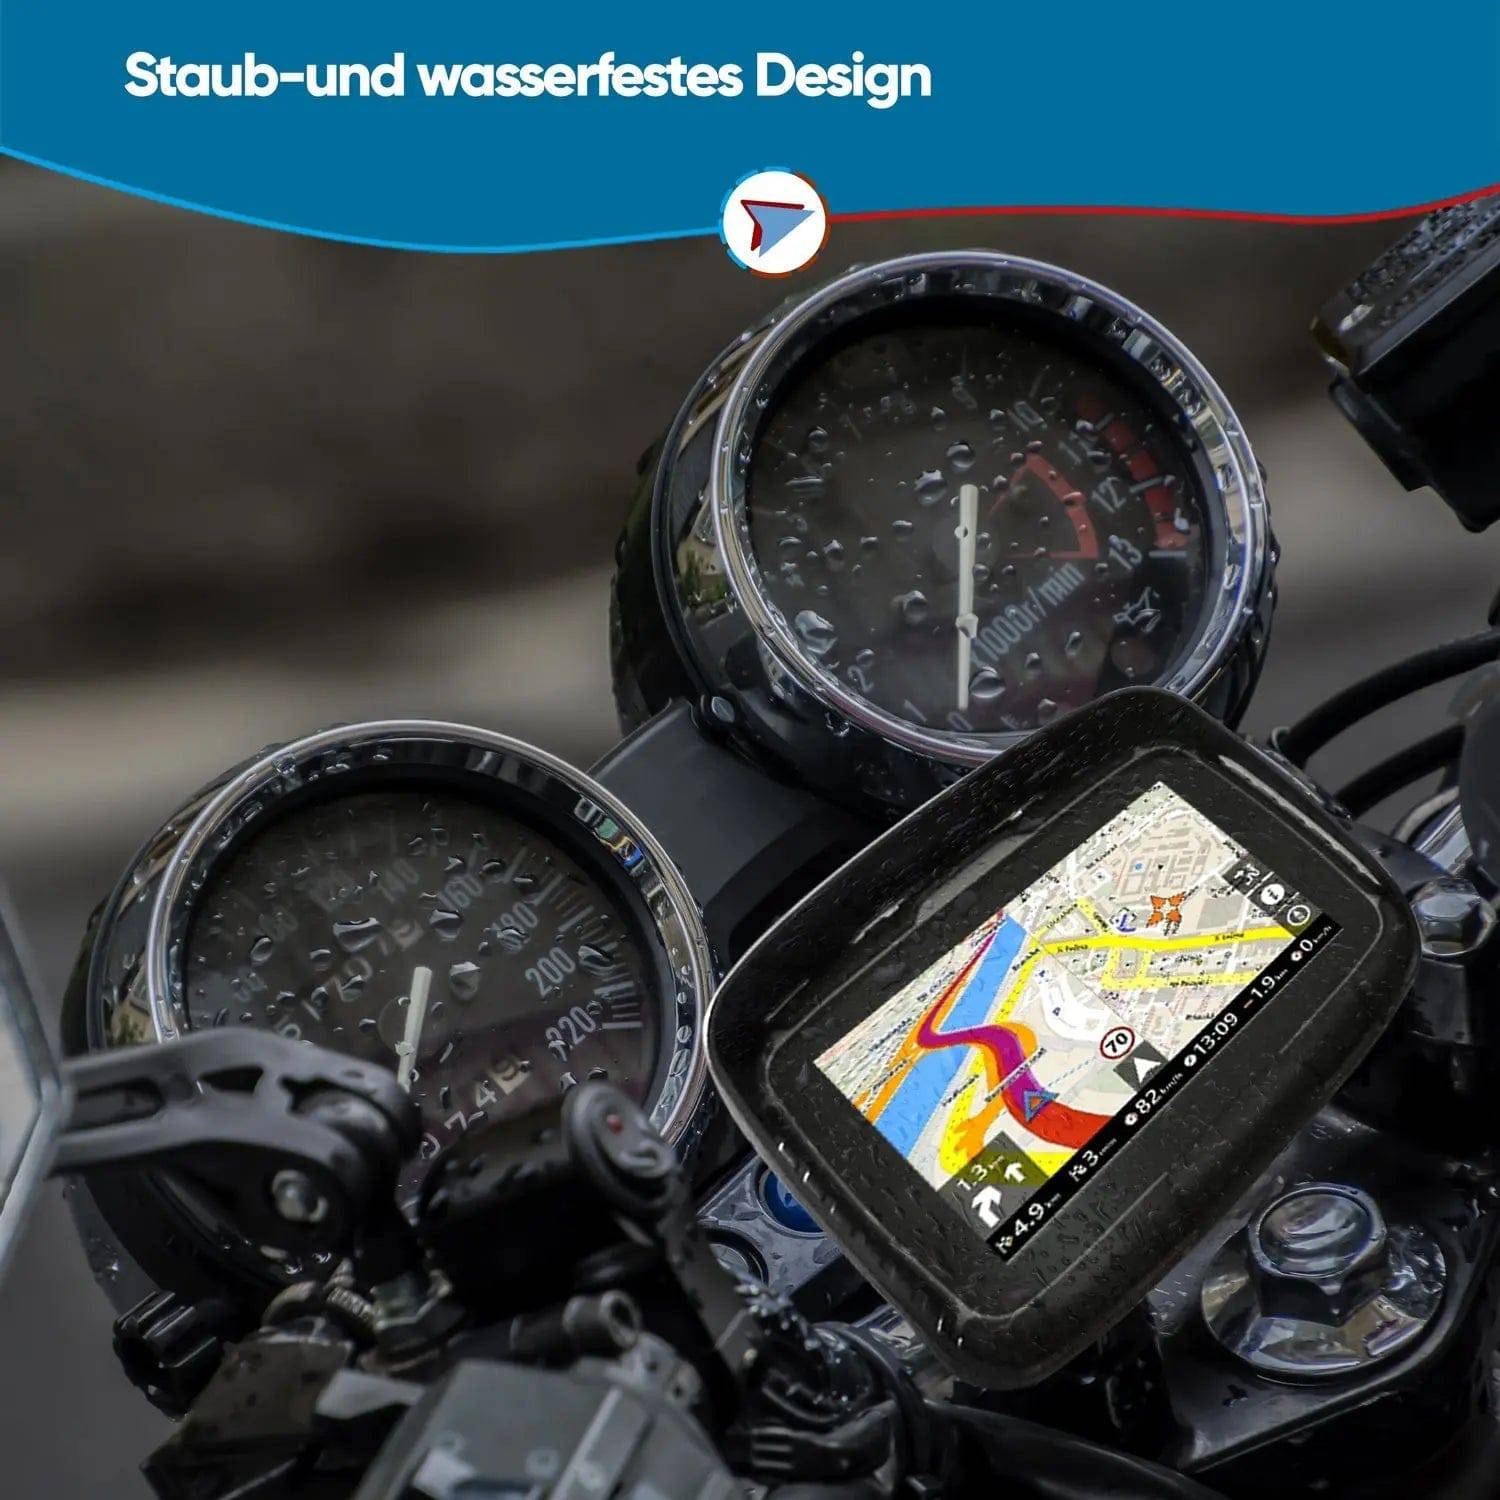 Elebest Rider W5 Motorrad - Navi 5 Zoll Display elebest motorrad navi motorrad navi test